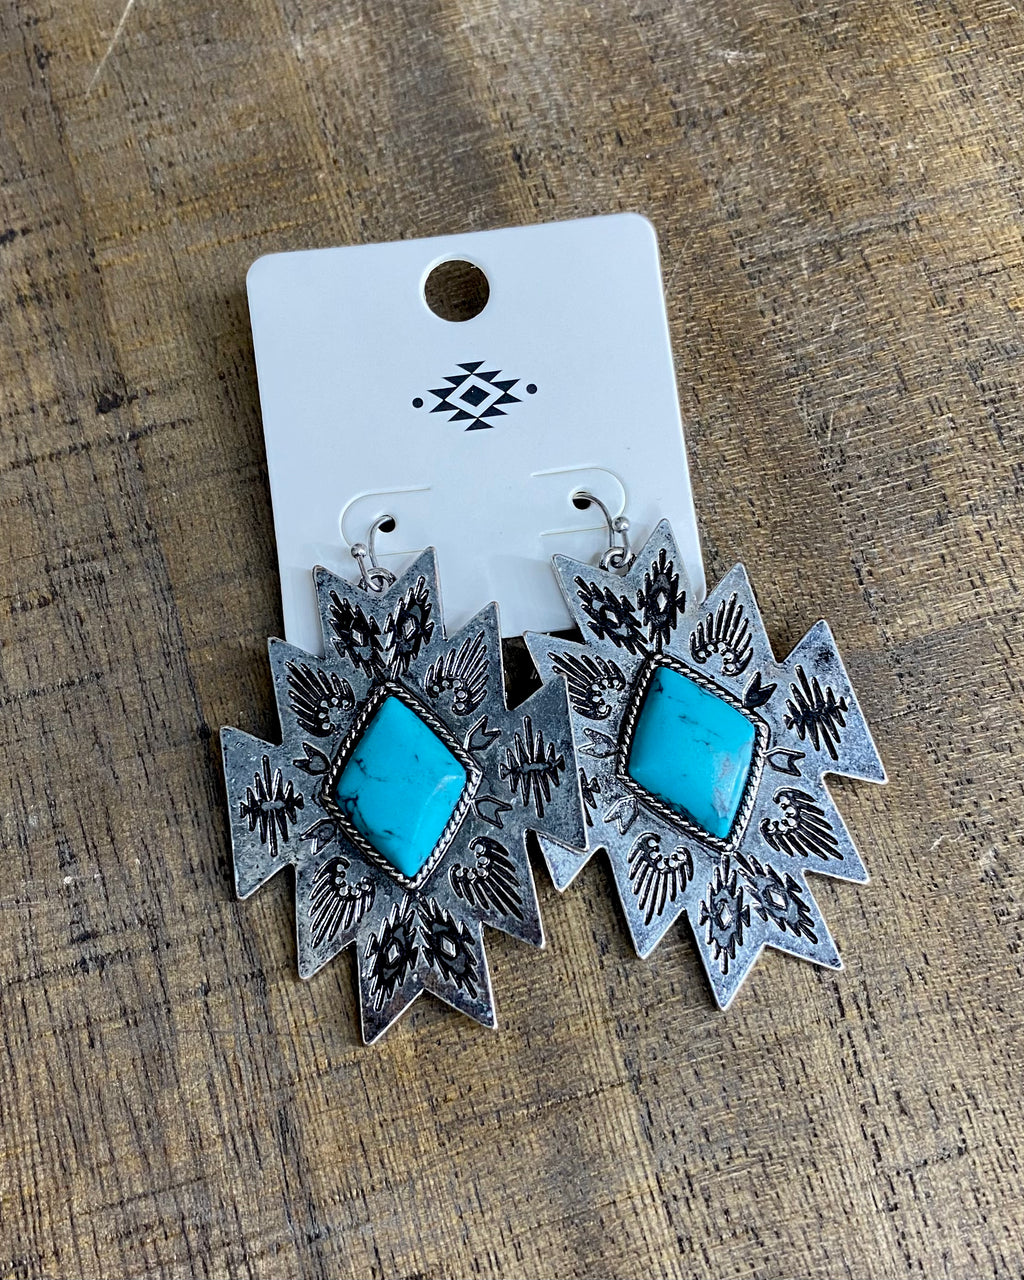 Turquoise Aztec Earrings